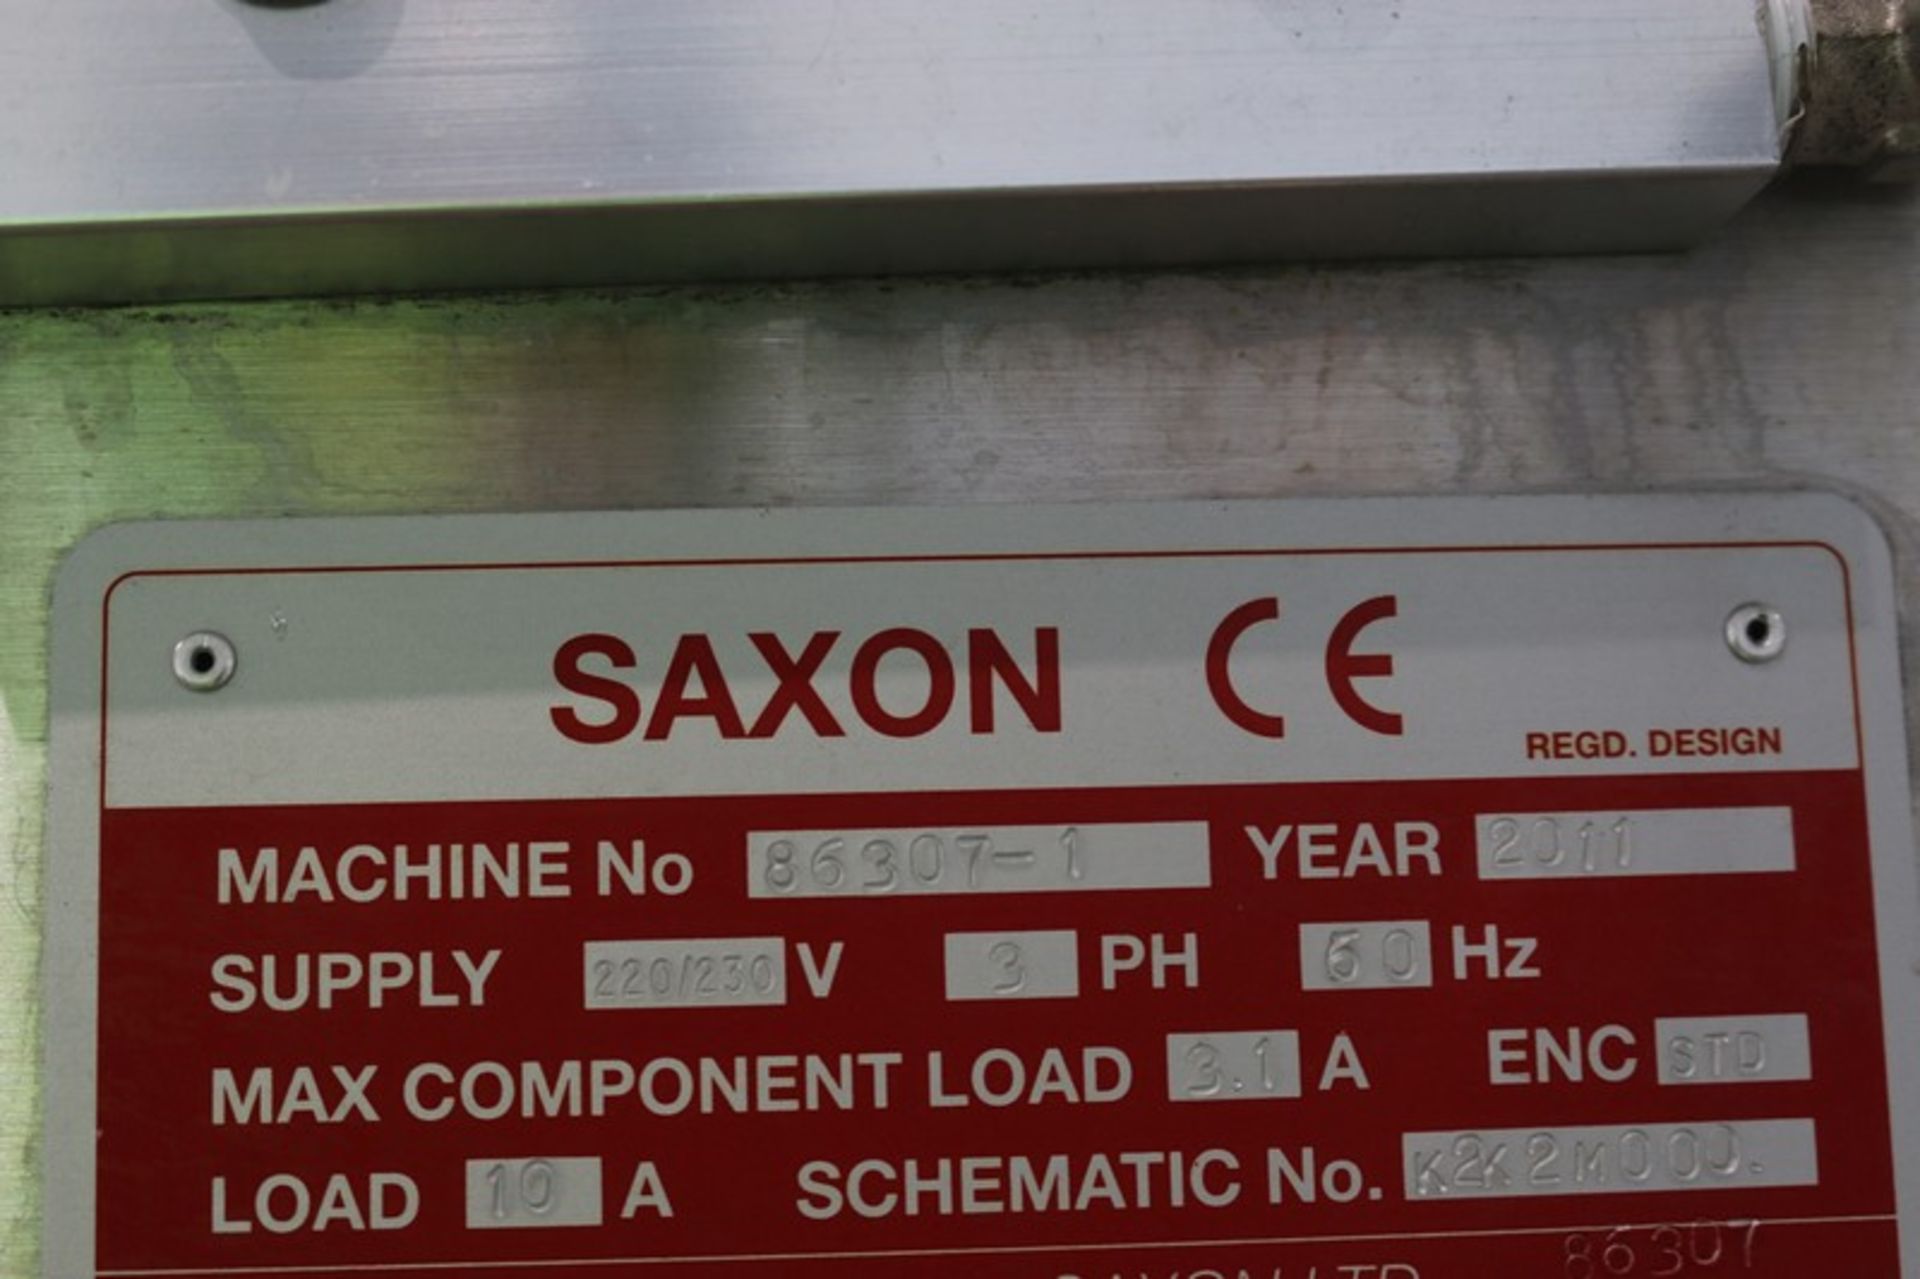 2011 Saxon Sealer,M/N 86307-1, 220/230 Volts, 3 Phase, with Aprox. 6" W Belt, Mounted S/S Frame ( - Bild 7 aus 9